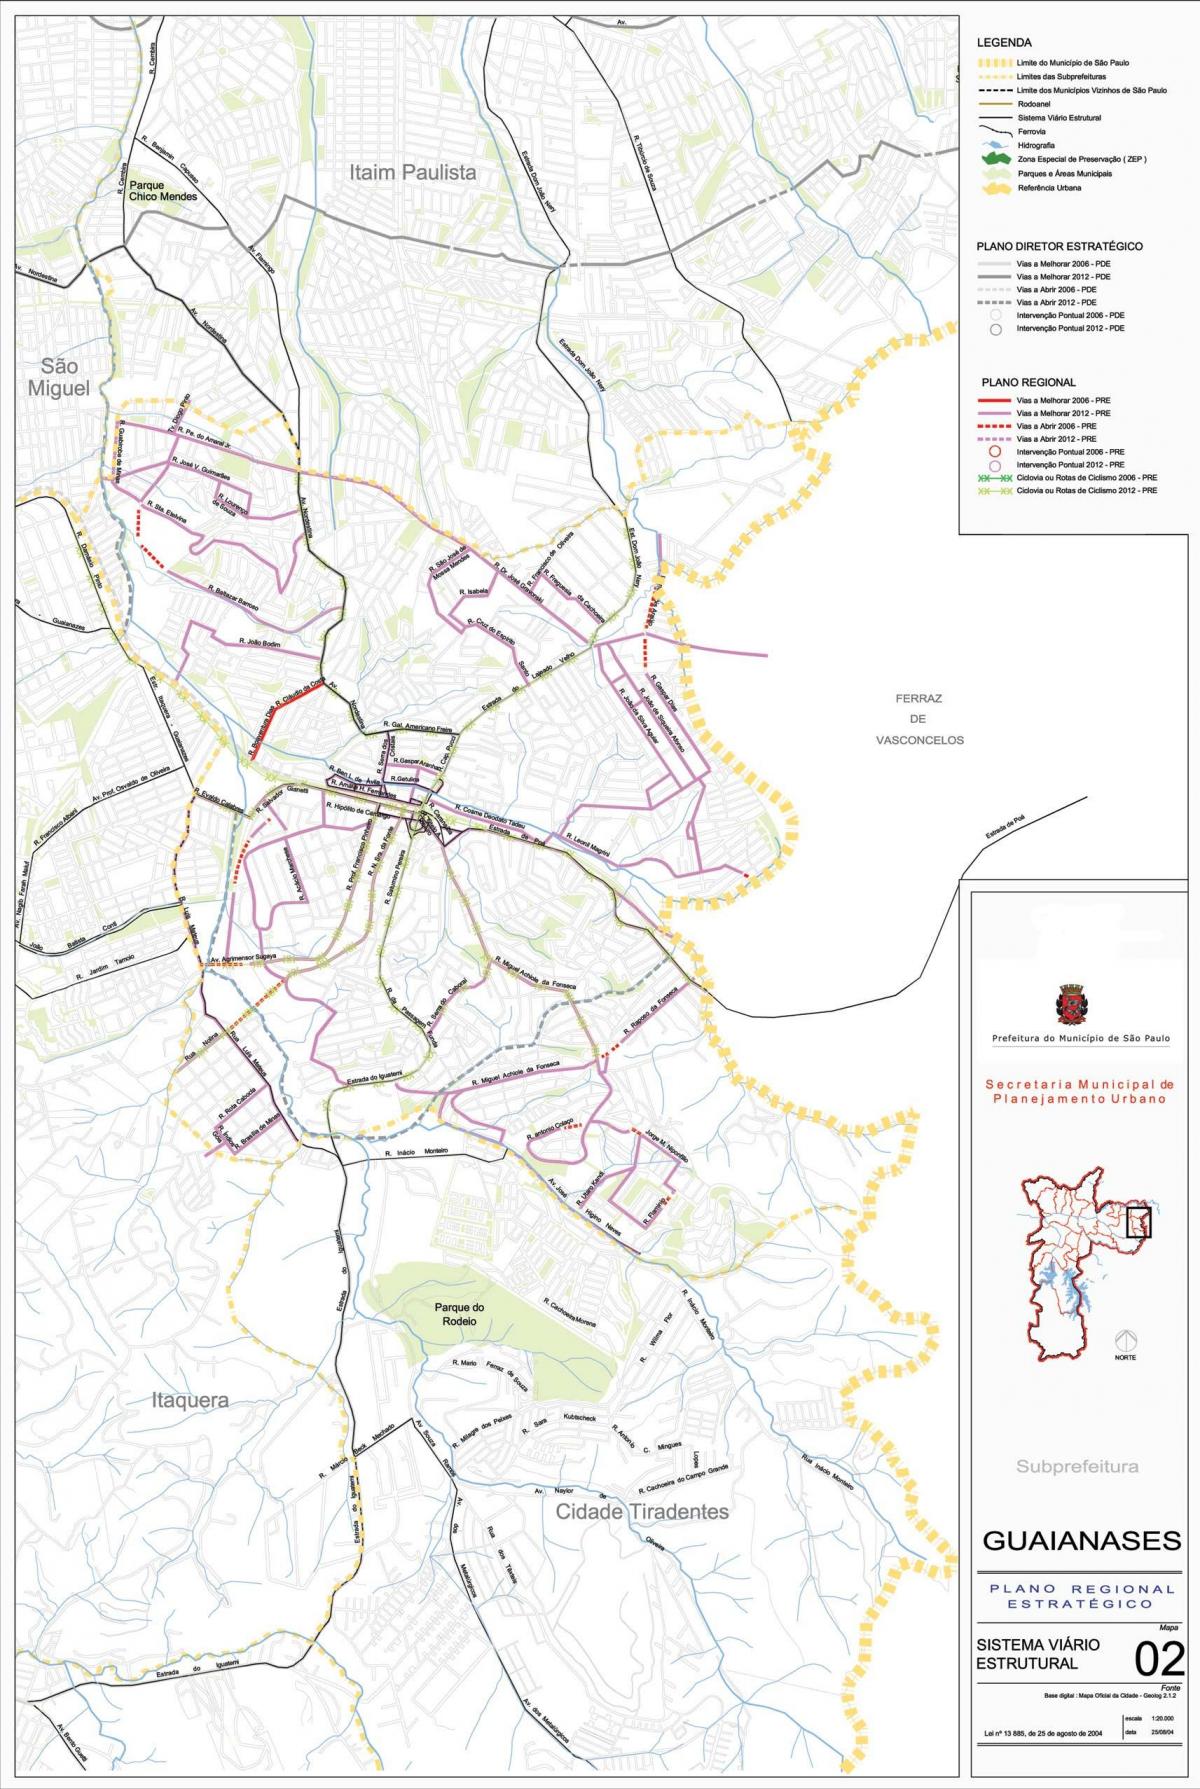 Mappa di Guaianases São Paulo - Strade